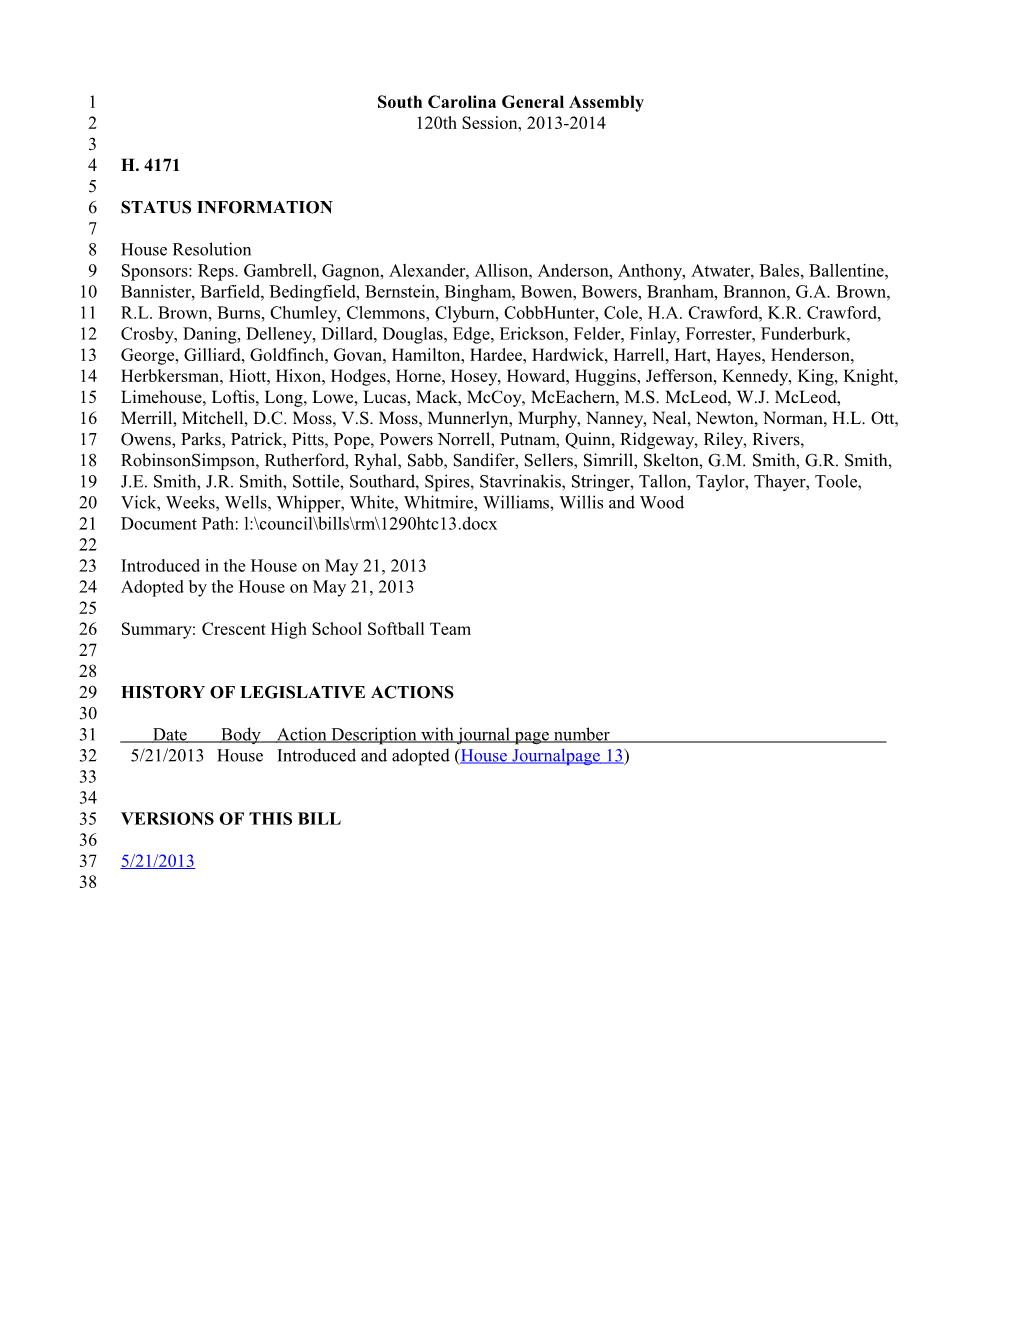 2013-2014 Bill 4171: Crescent High School Softball Team - South Carolina Legislature Online